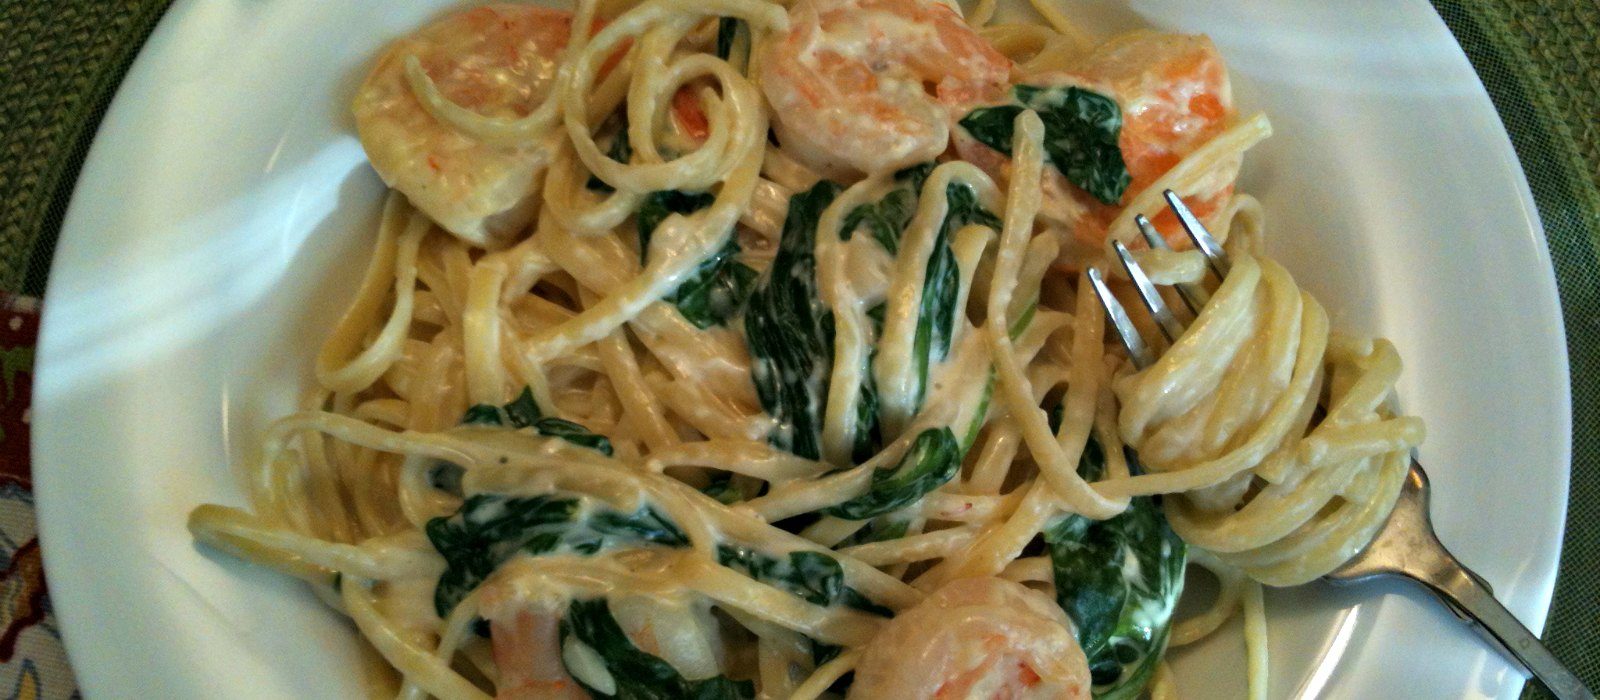 Garlic Shrimp and Spinach Lingunie